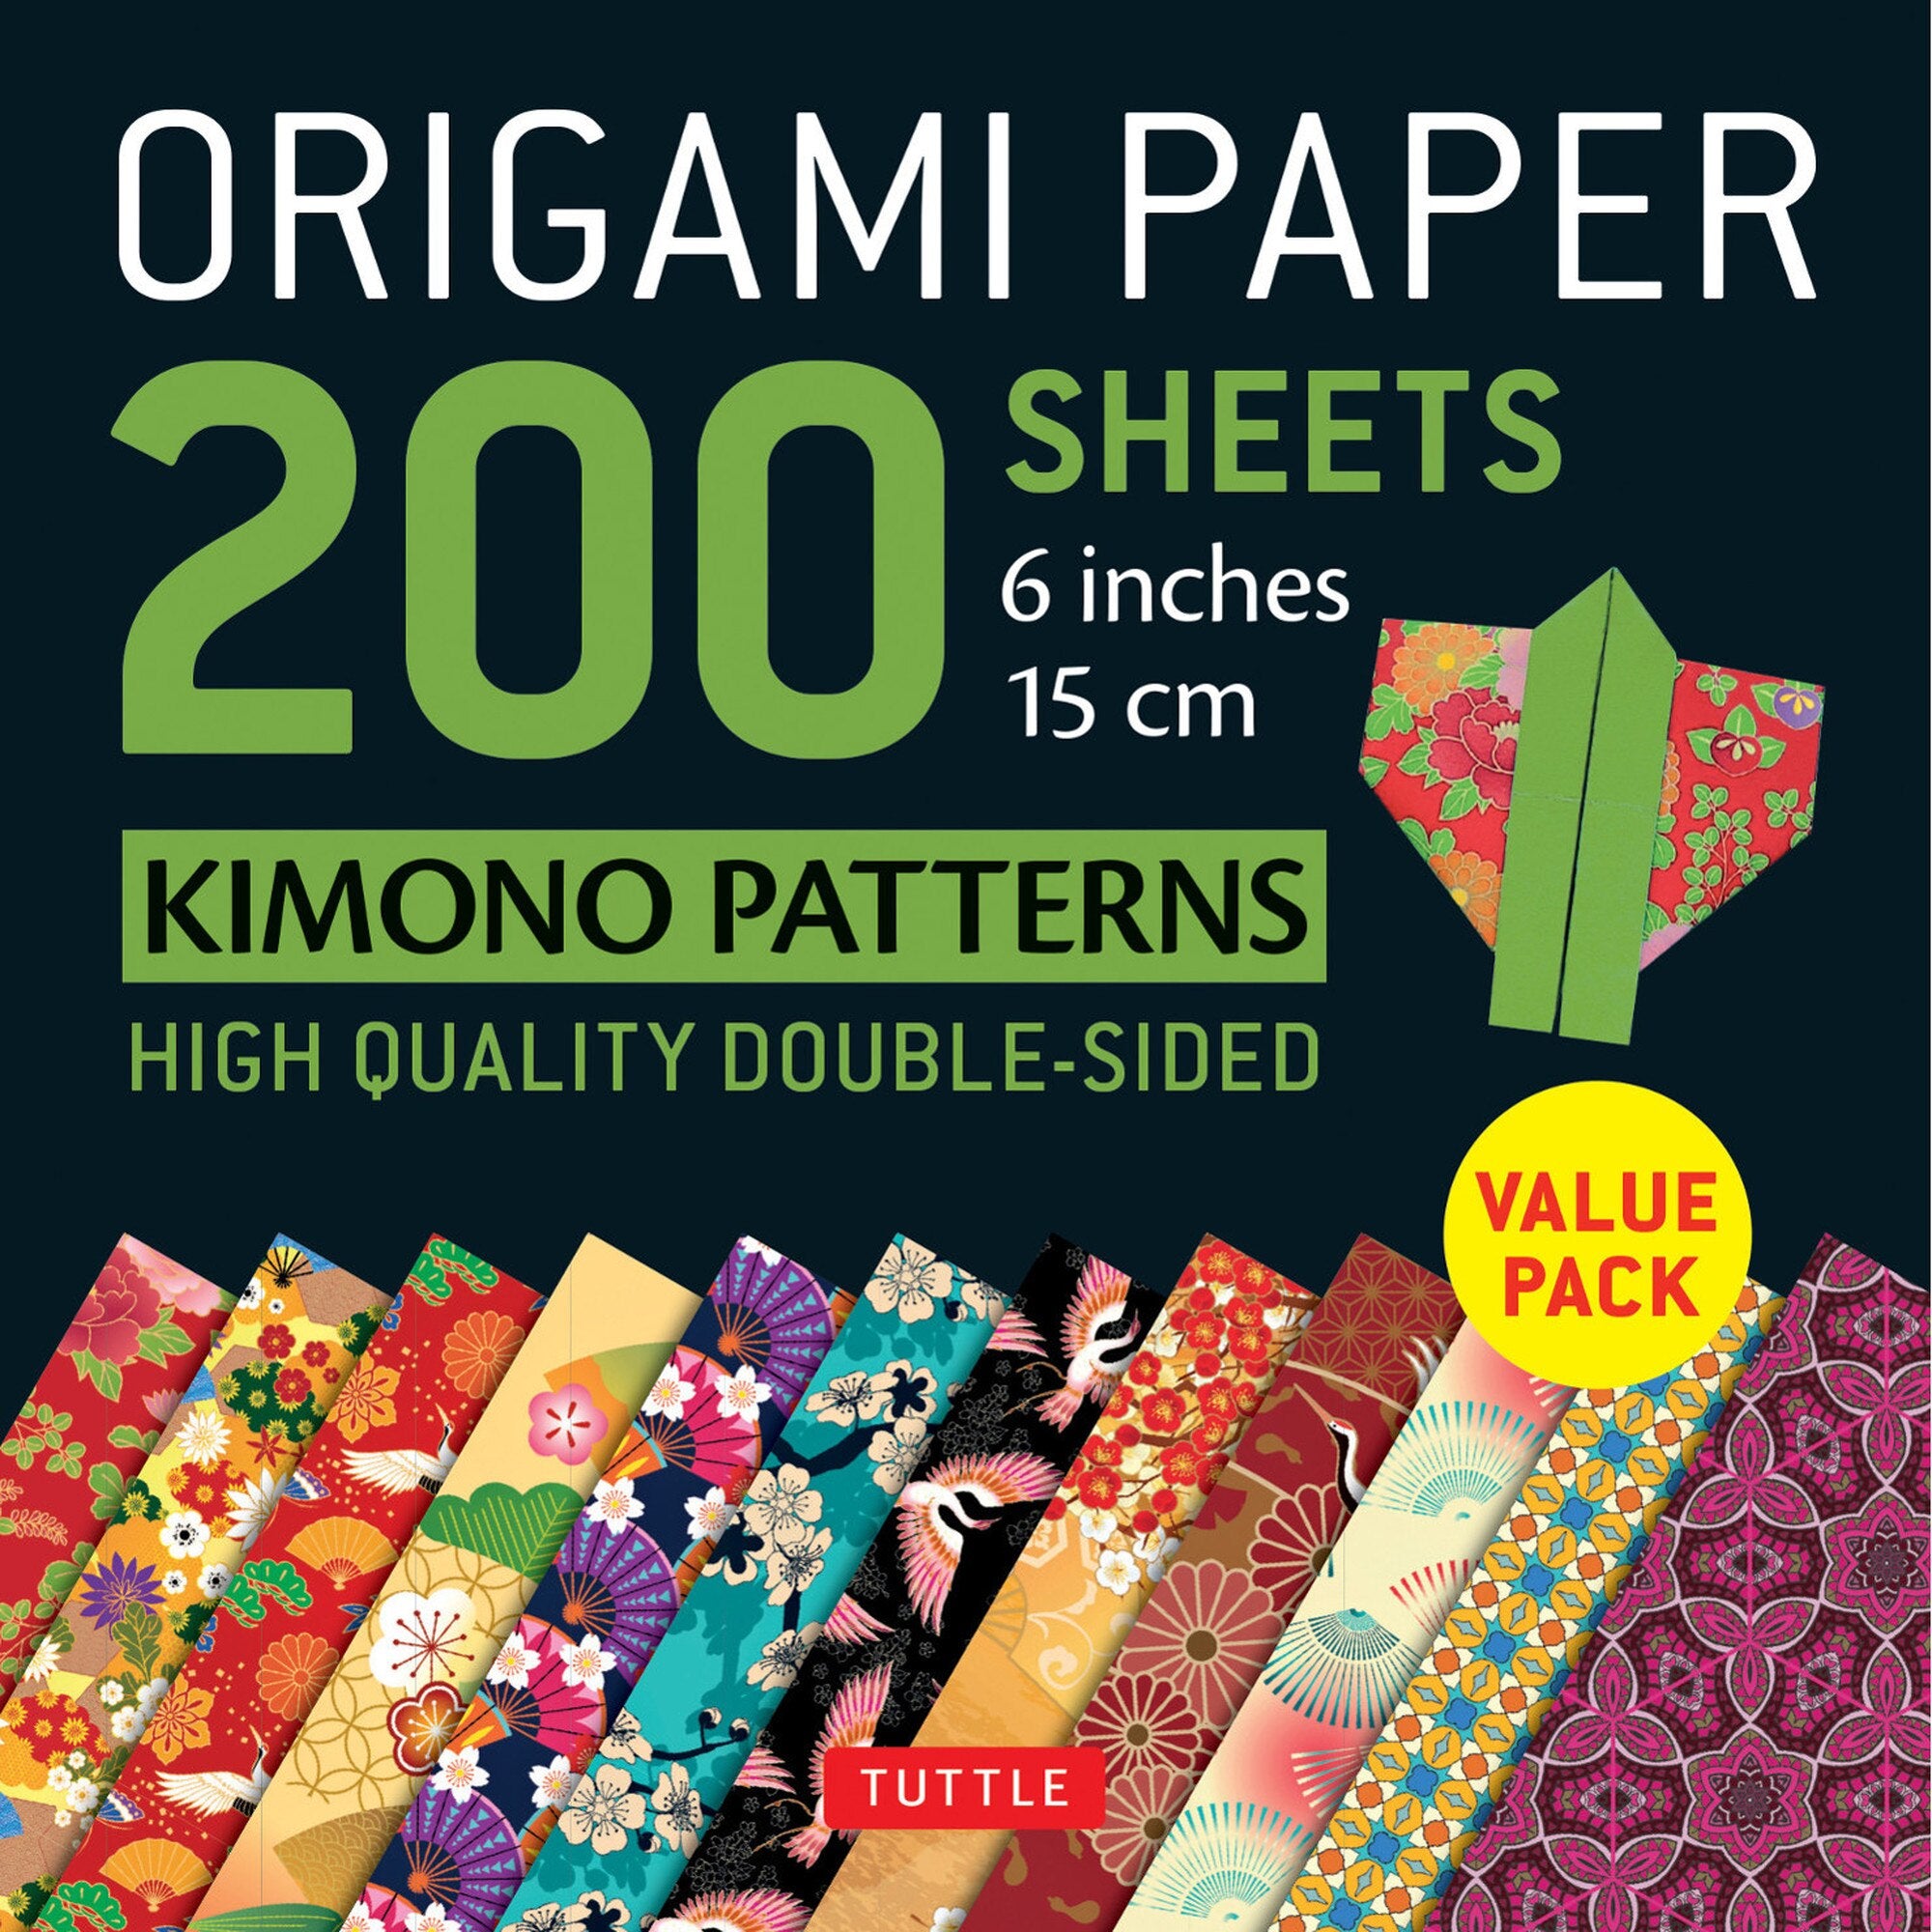 200 Sheets Kimono Patterns Origami Paper